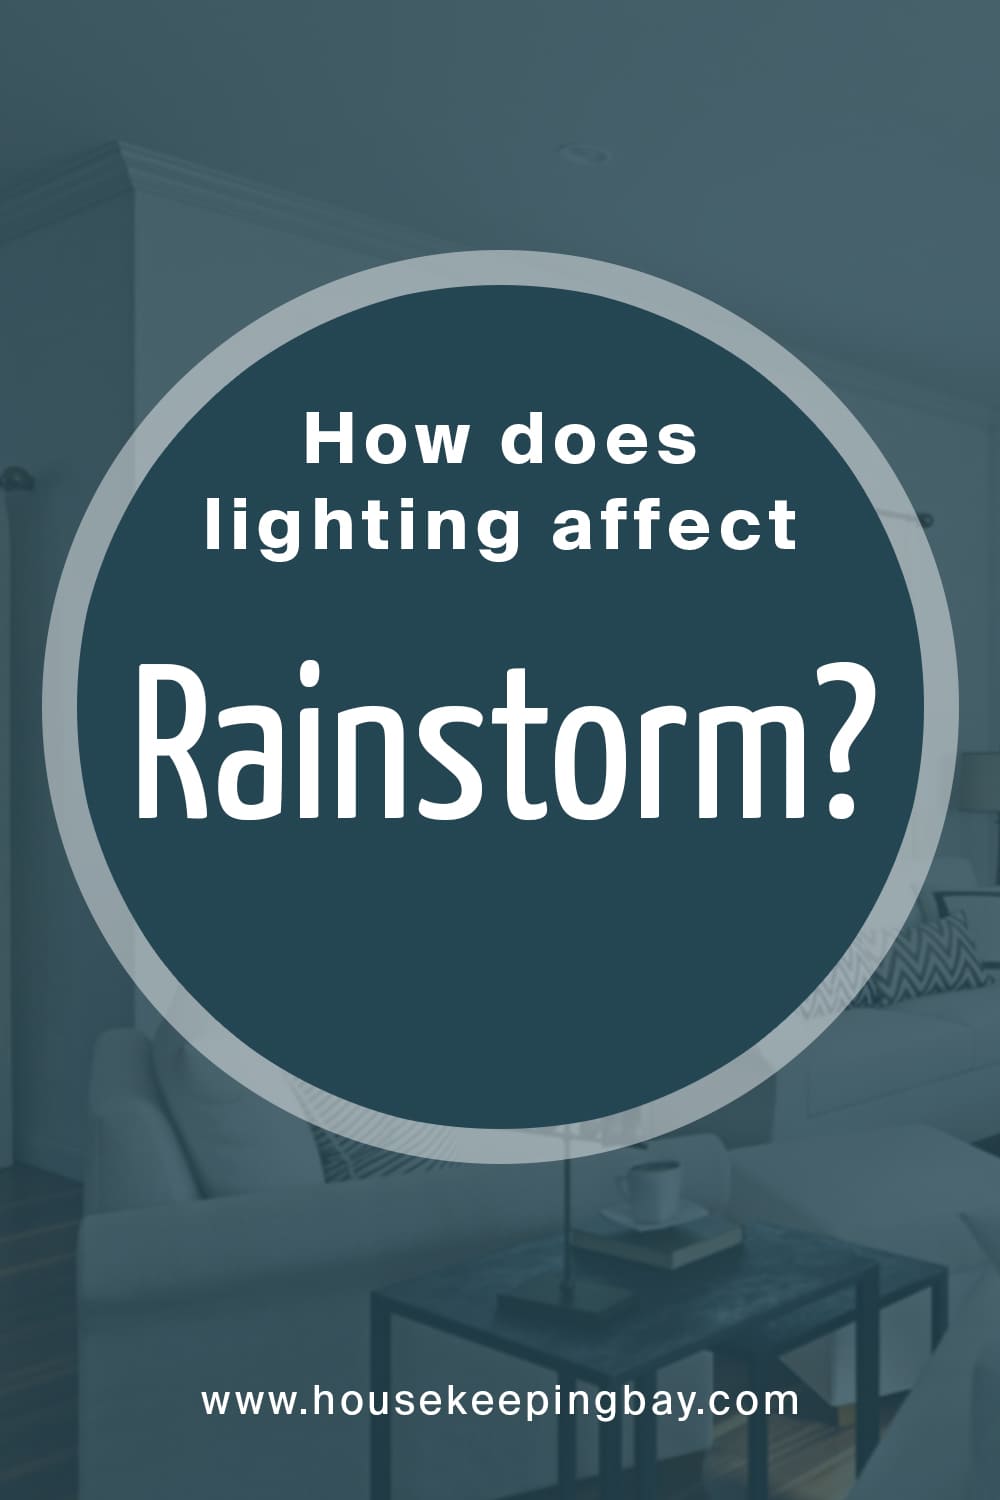 How does lighting affect Rainstorm